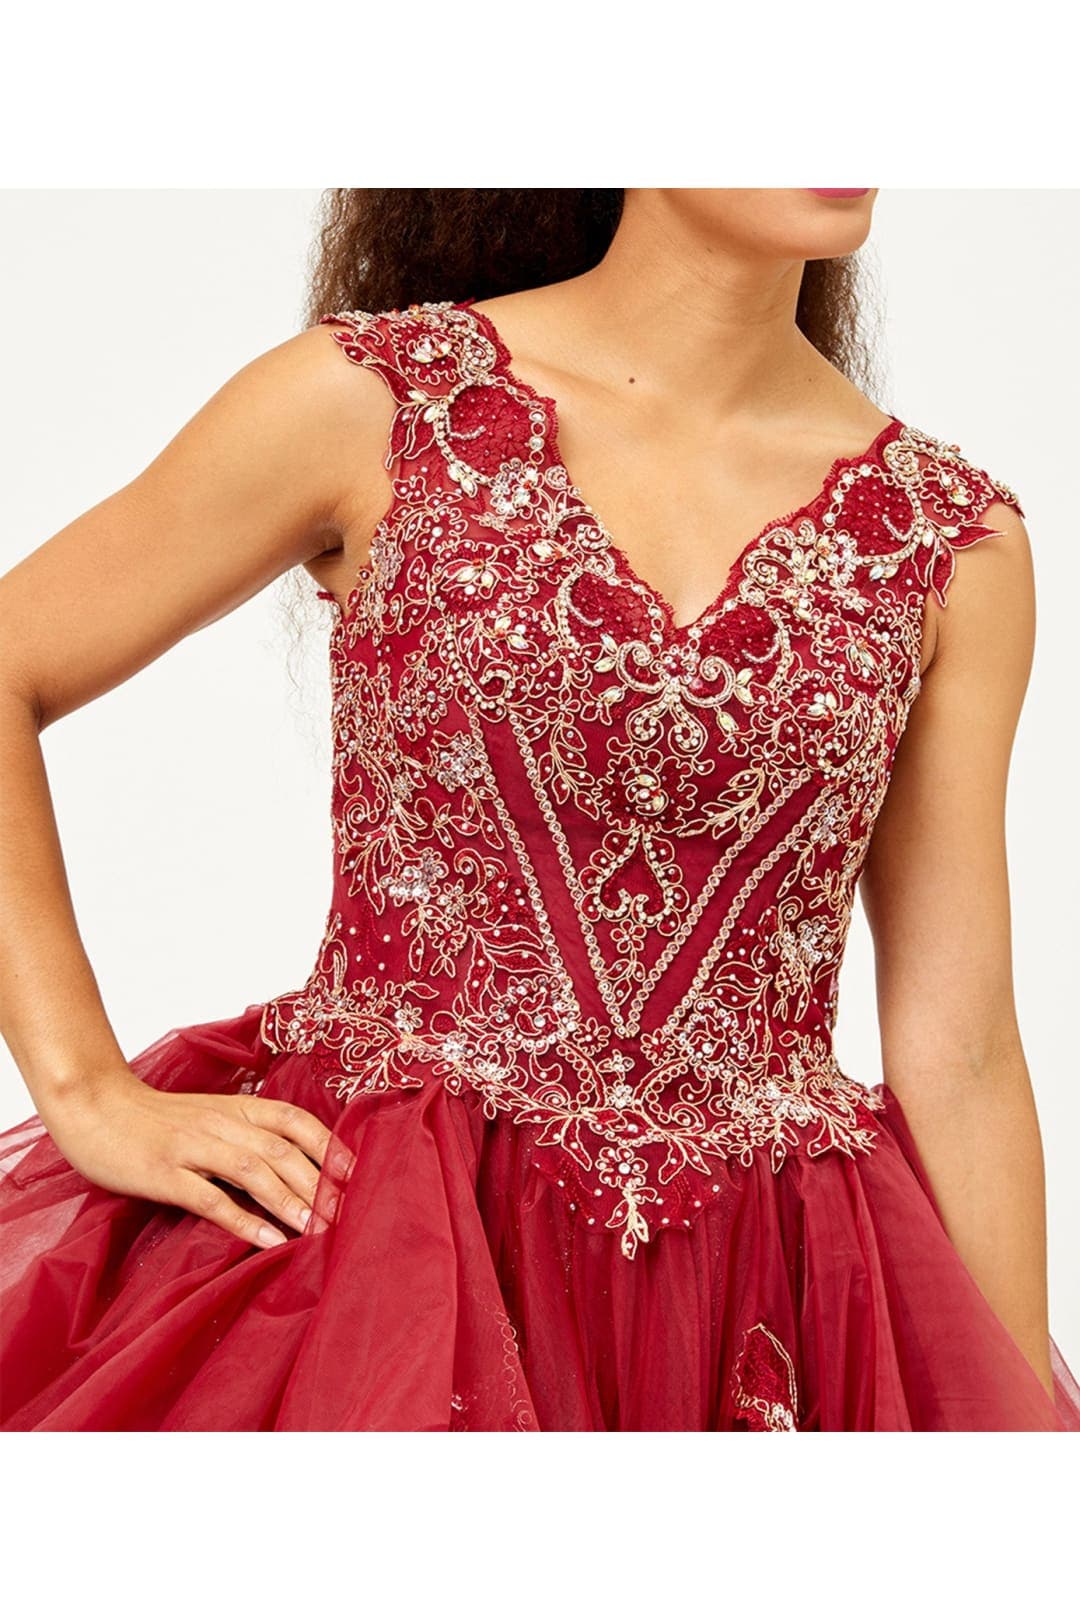 Layla K LK118 Sleeveless Corset Embellished V Neckline Ball Gown - Burgundy / 4